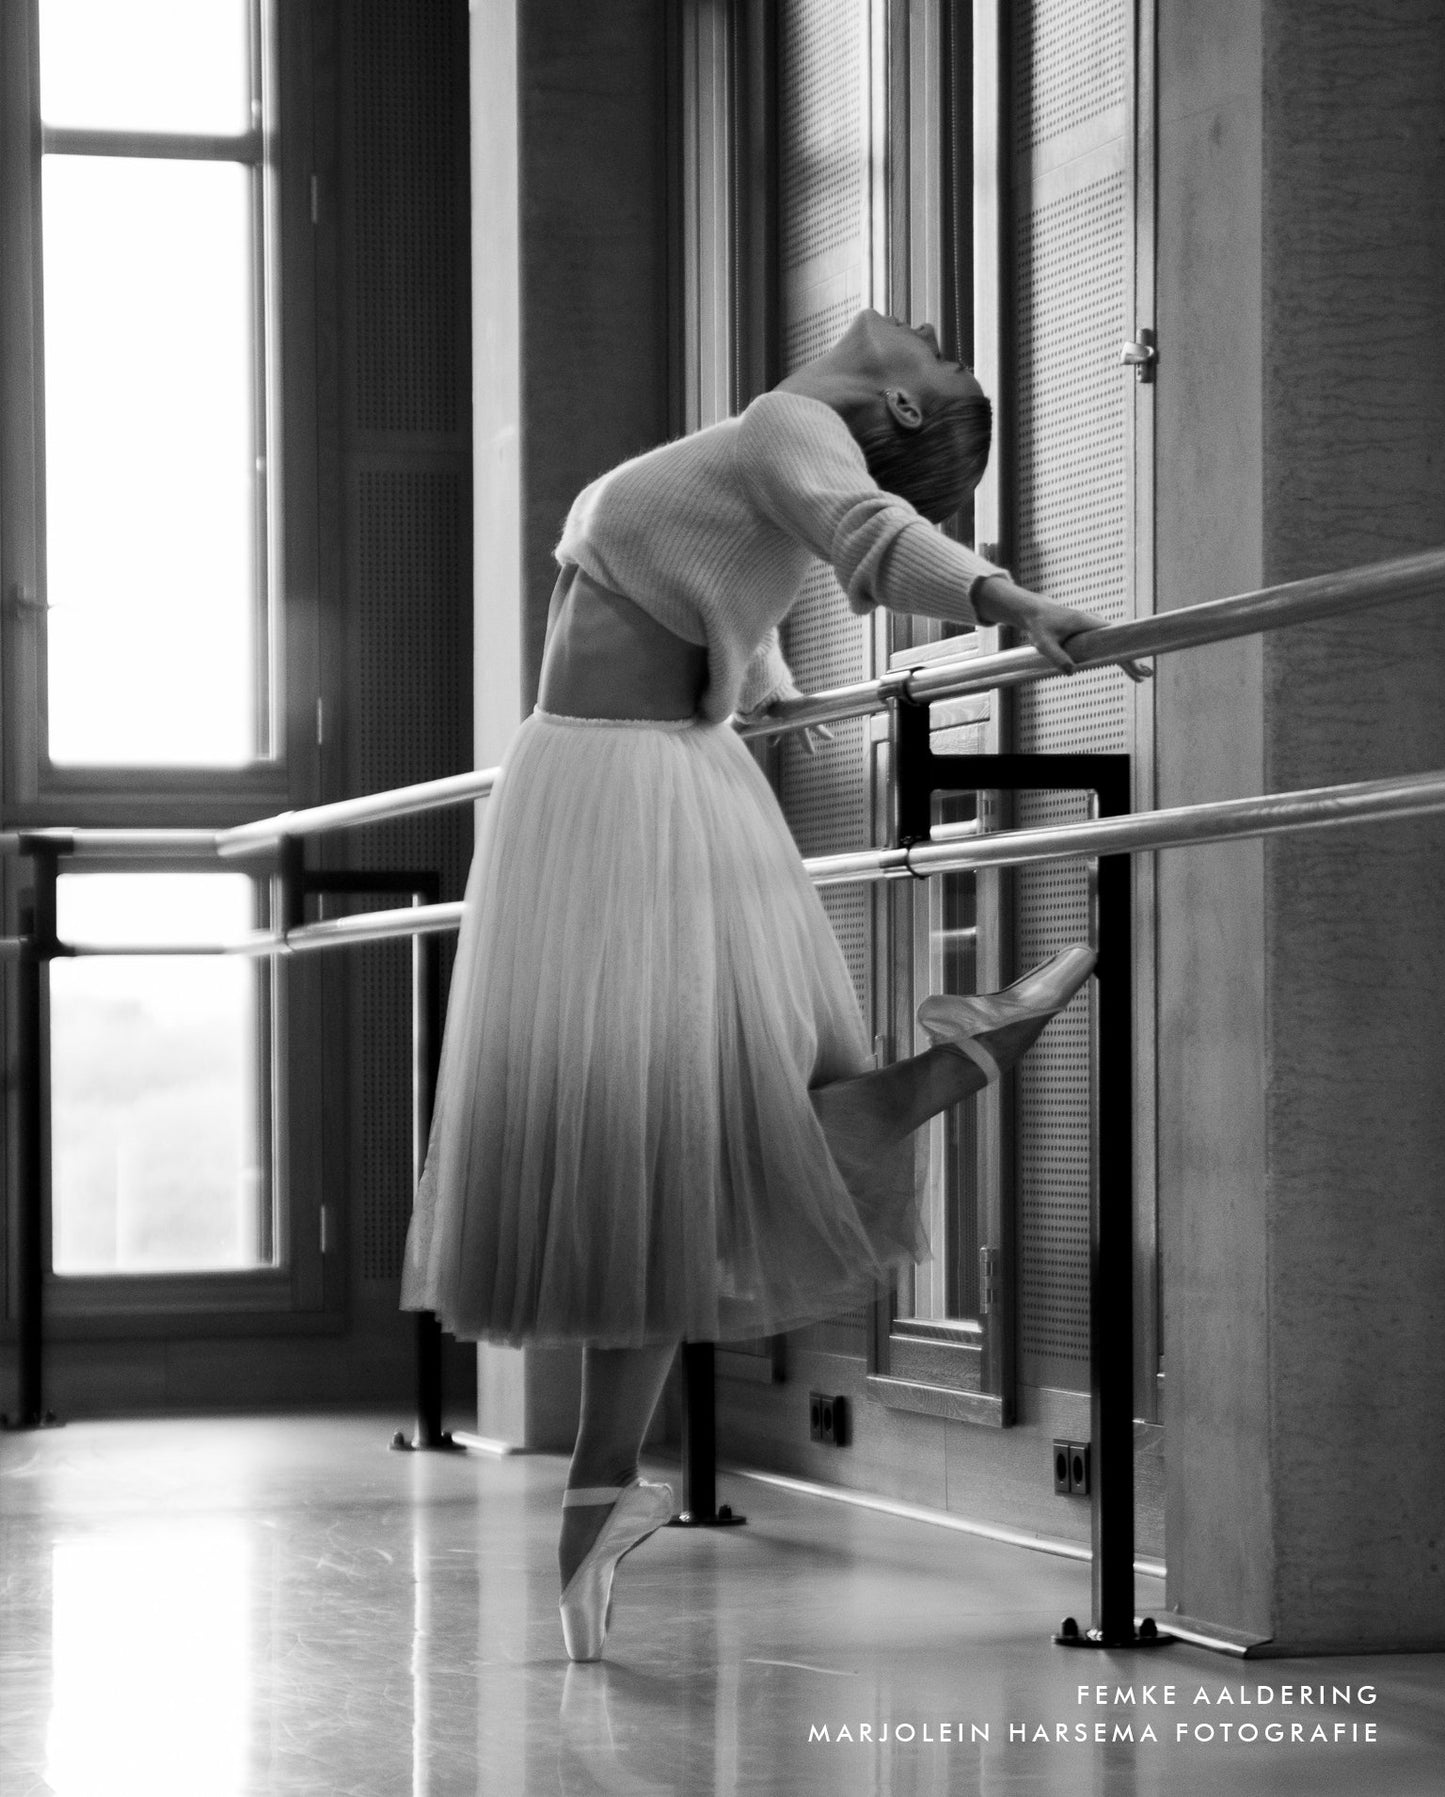 Adult ballerina. Ballet terms. Ballet shoes. Classical romantic ballet tutu